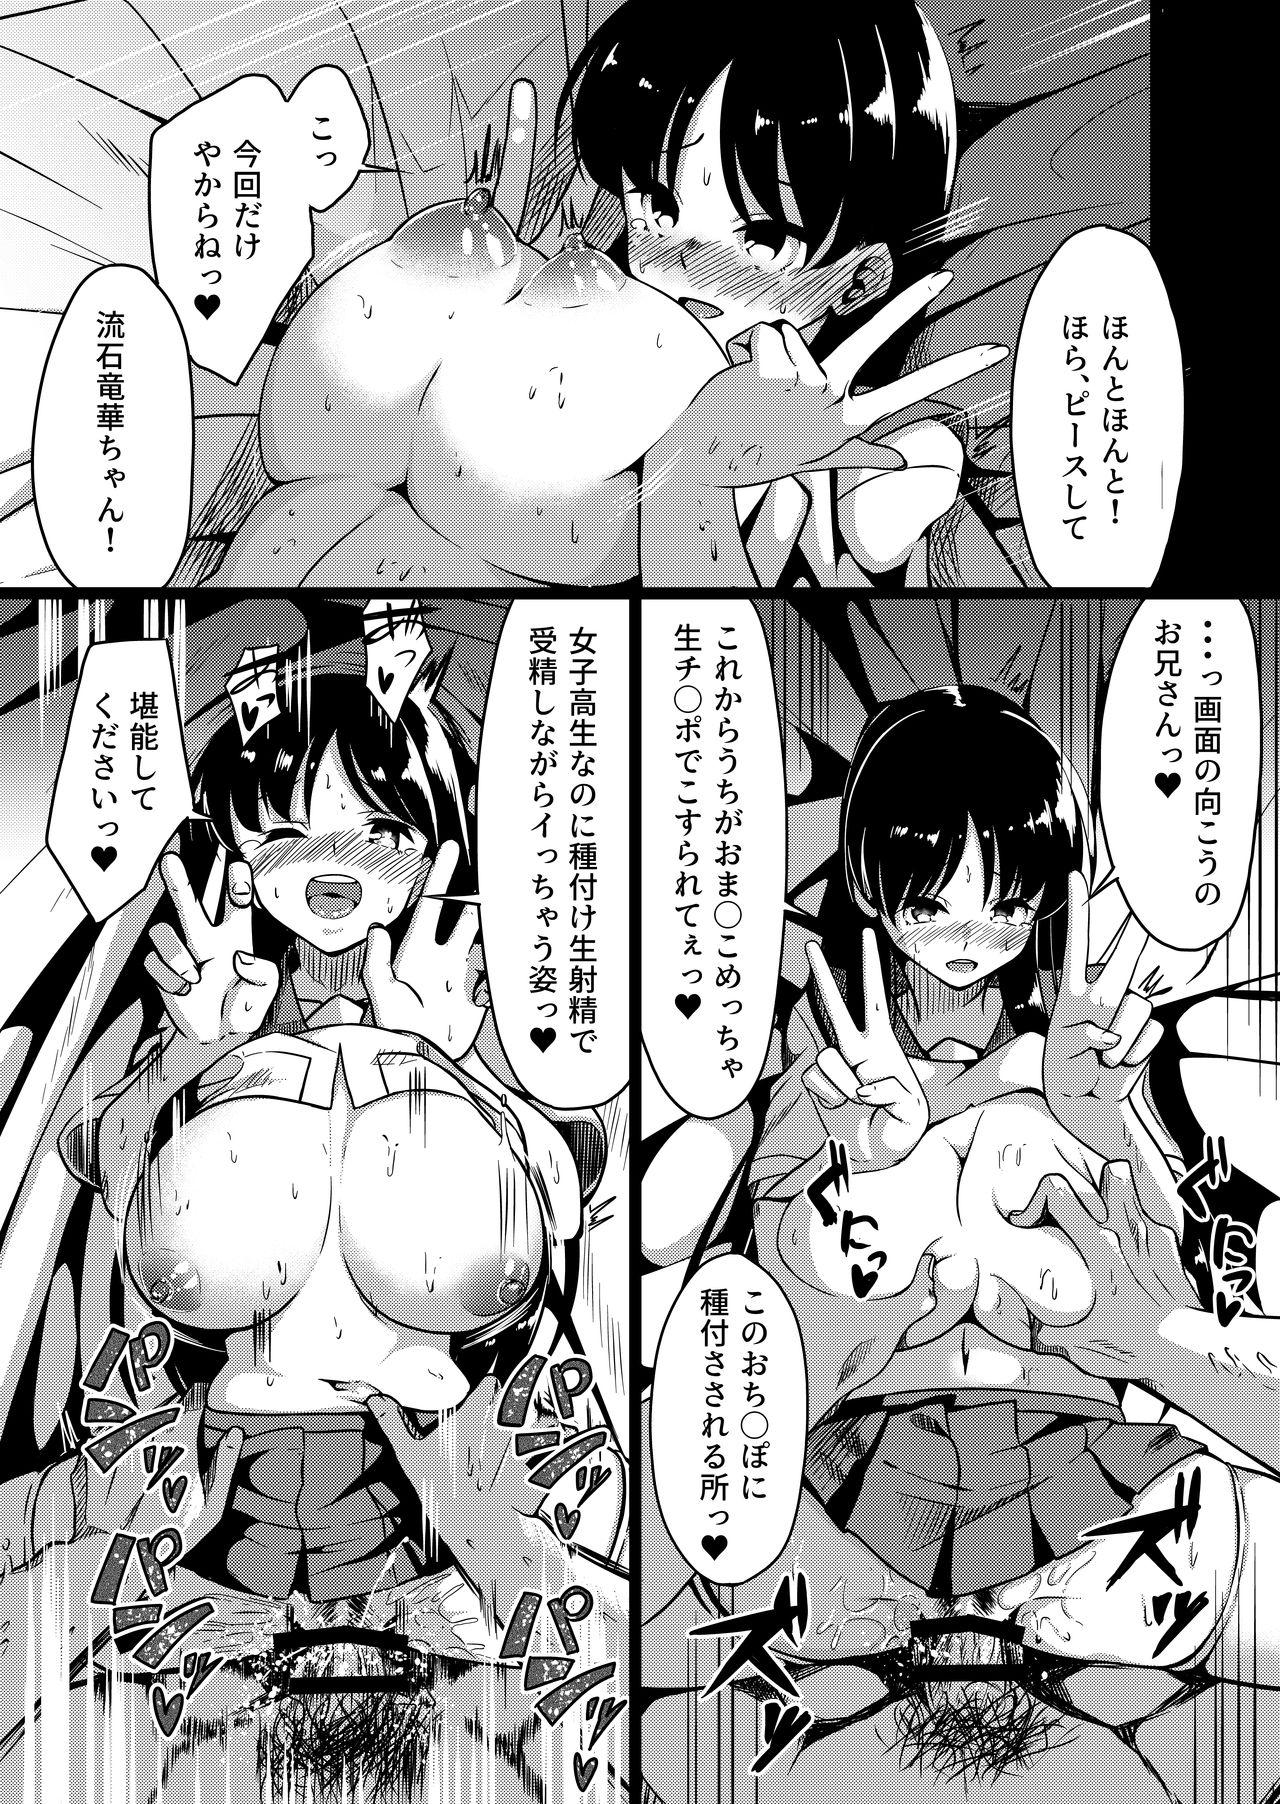 Blowjob Shimizudani Ryuuka no Mijikai Ero Manga - Saki Naked Women Fucking - Page 5